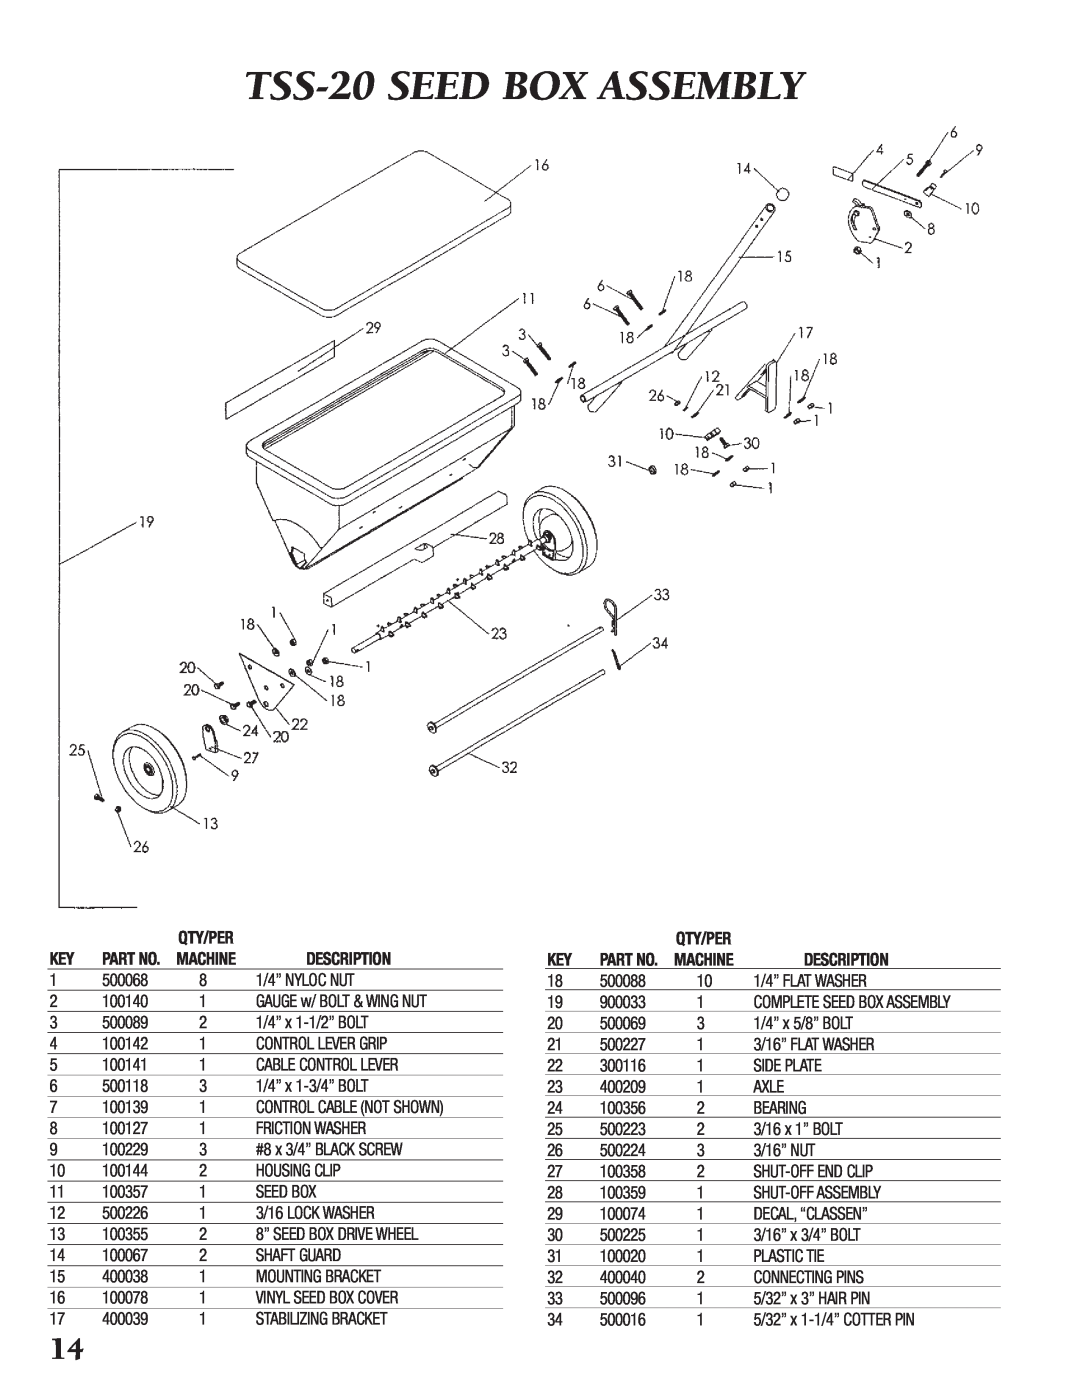 Little Wonder TRS-20 manual TSS-20SEED BOX ASSEMBLY, Description, Qty/Per, Machine 